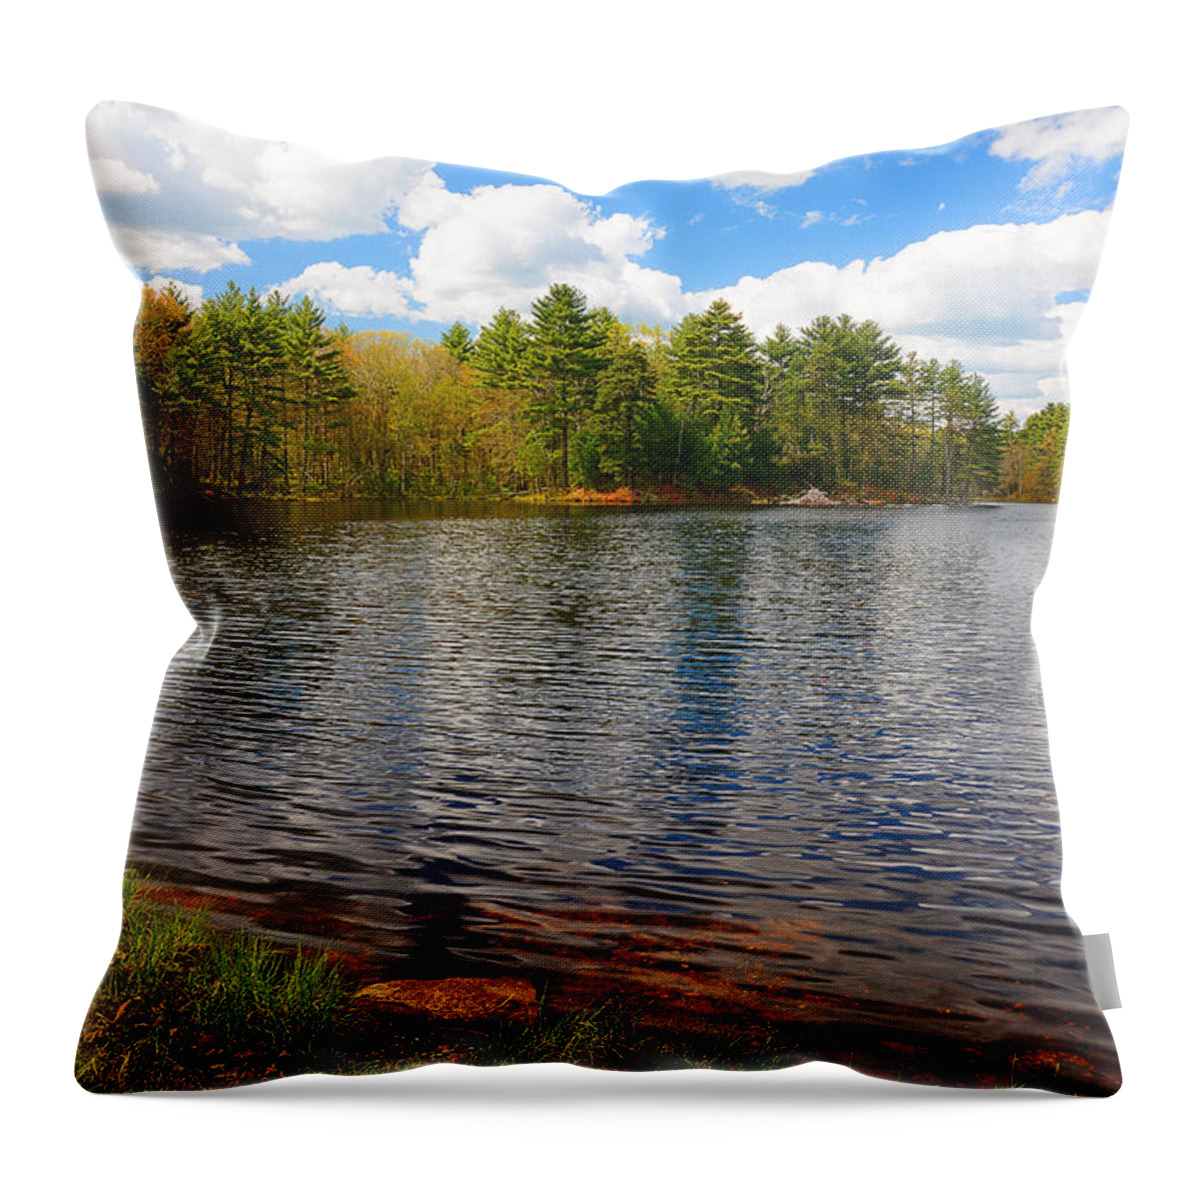 Rhode Island Throw Pillow featuring the photograph Pulaski Park by Lourry Legarde